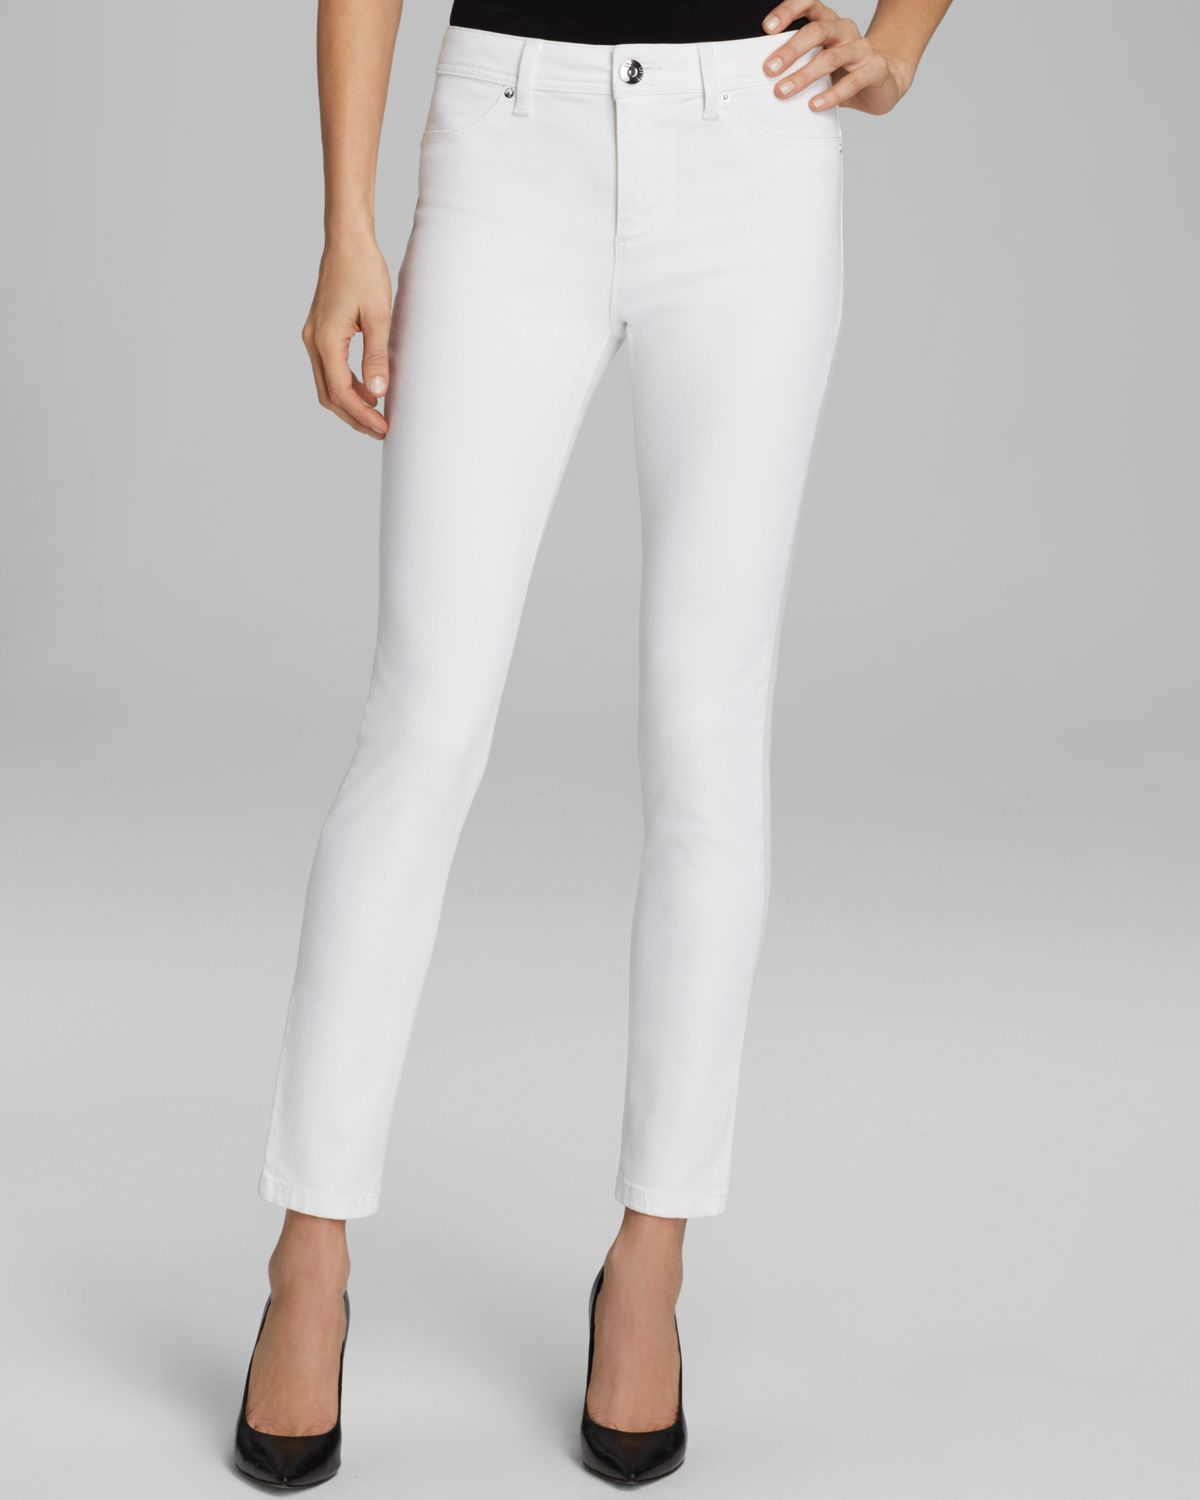 DL1961 Jeans Dlx Nina Ultra High Rise Skinny in Milk in White - Lyst